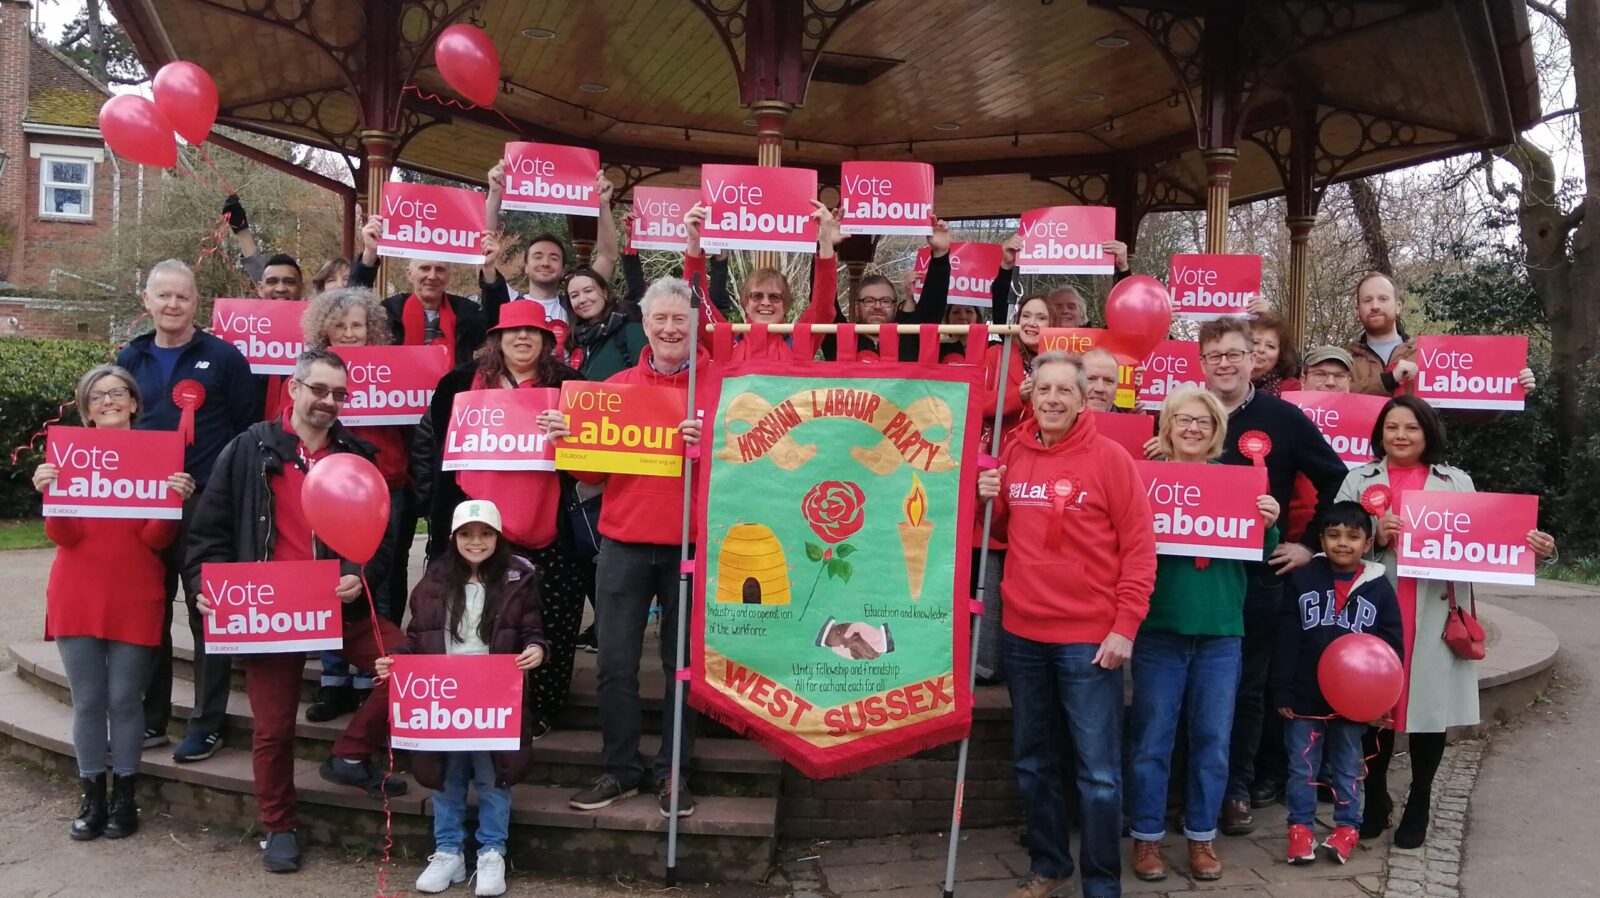 Horsham Labour Launch in Horsham Park